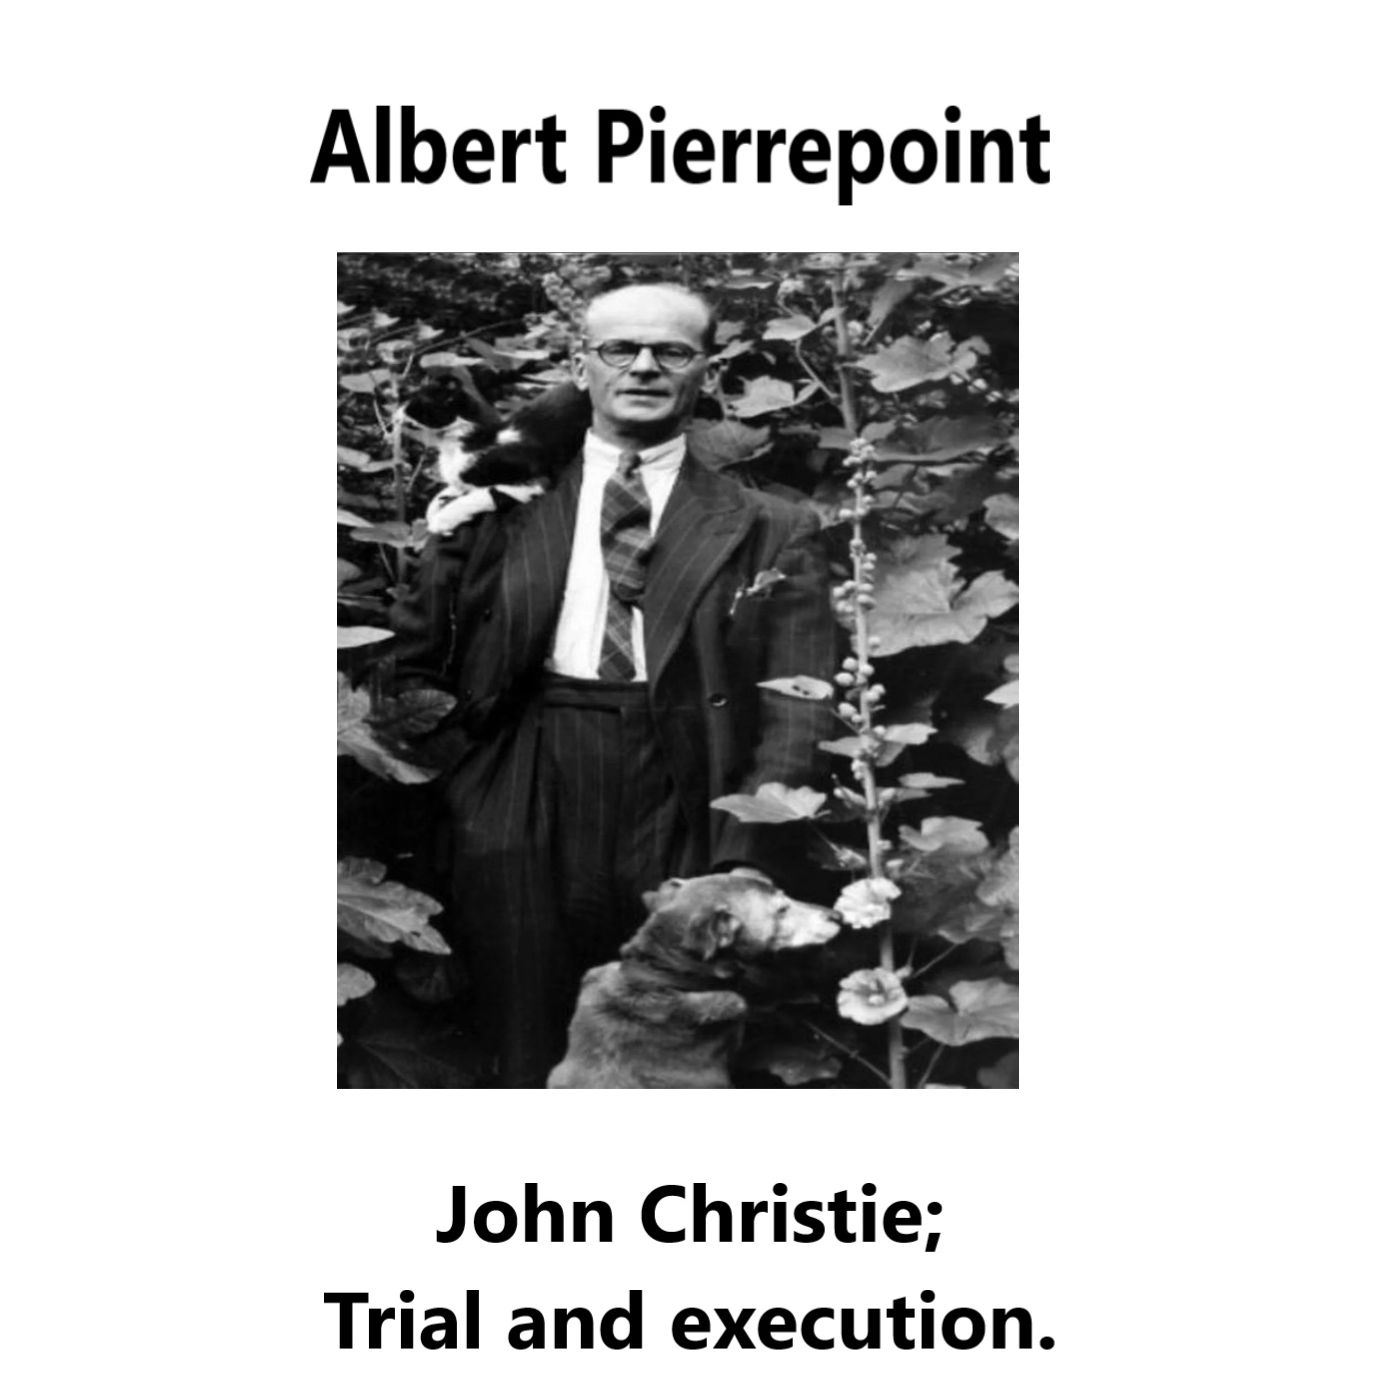 Albert Pierrepoint: the demise of John Christie